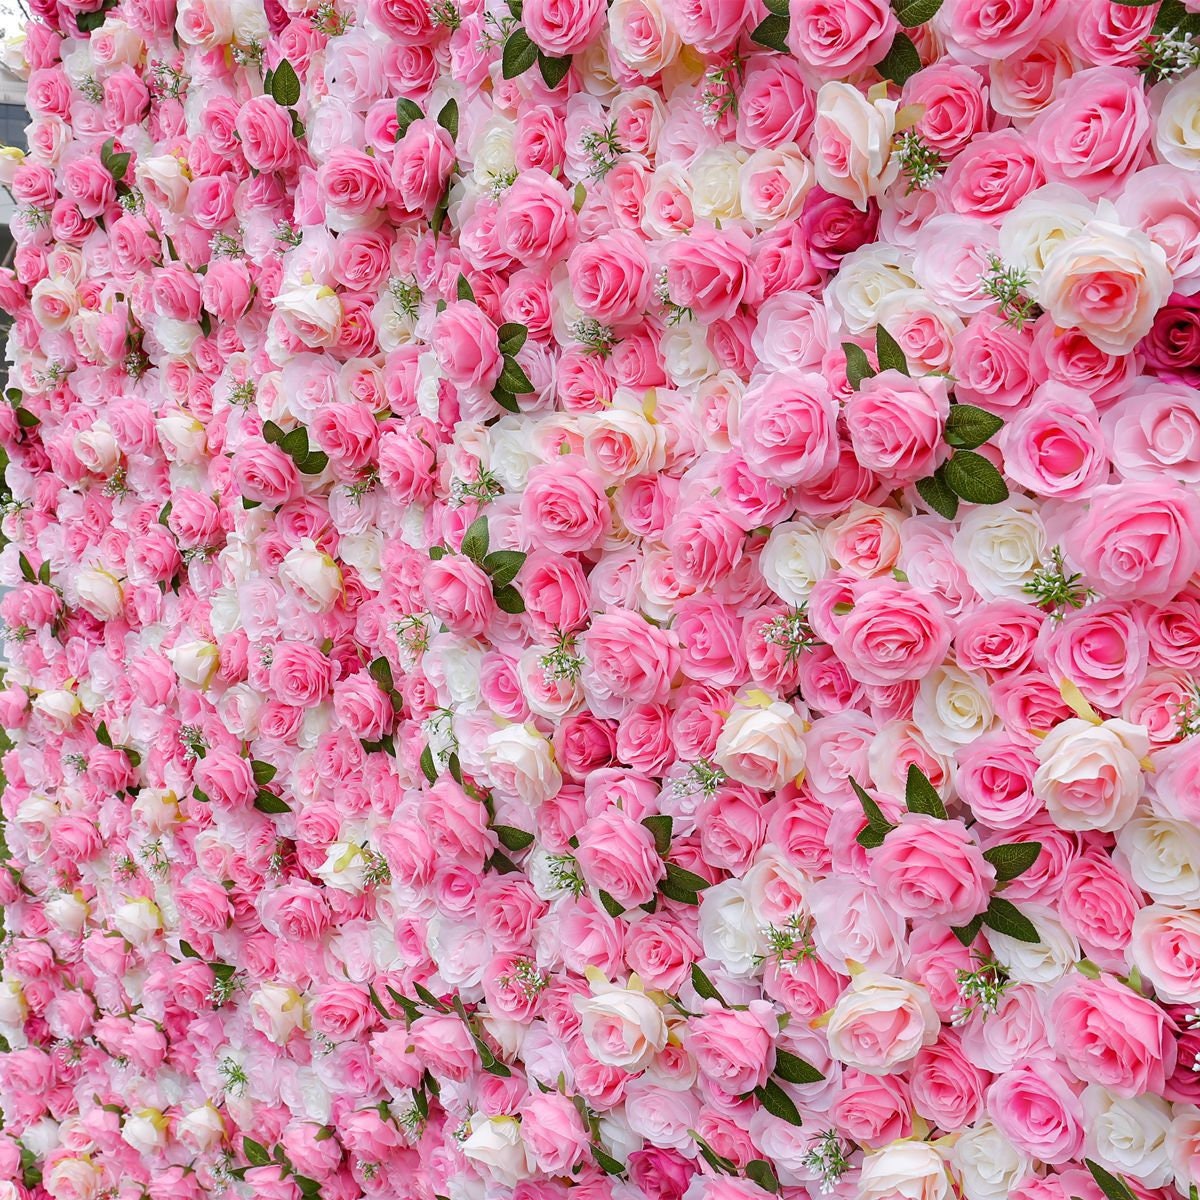 Spring Pink Flower Wall Wedding Photography Backdrop Special Event Party Boutique Shop Arrangement Decor Floral Panels 40x60cm